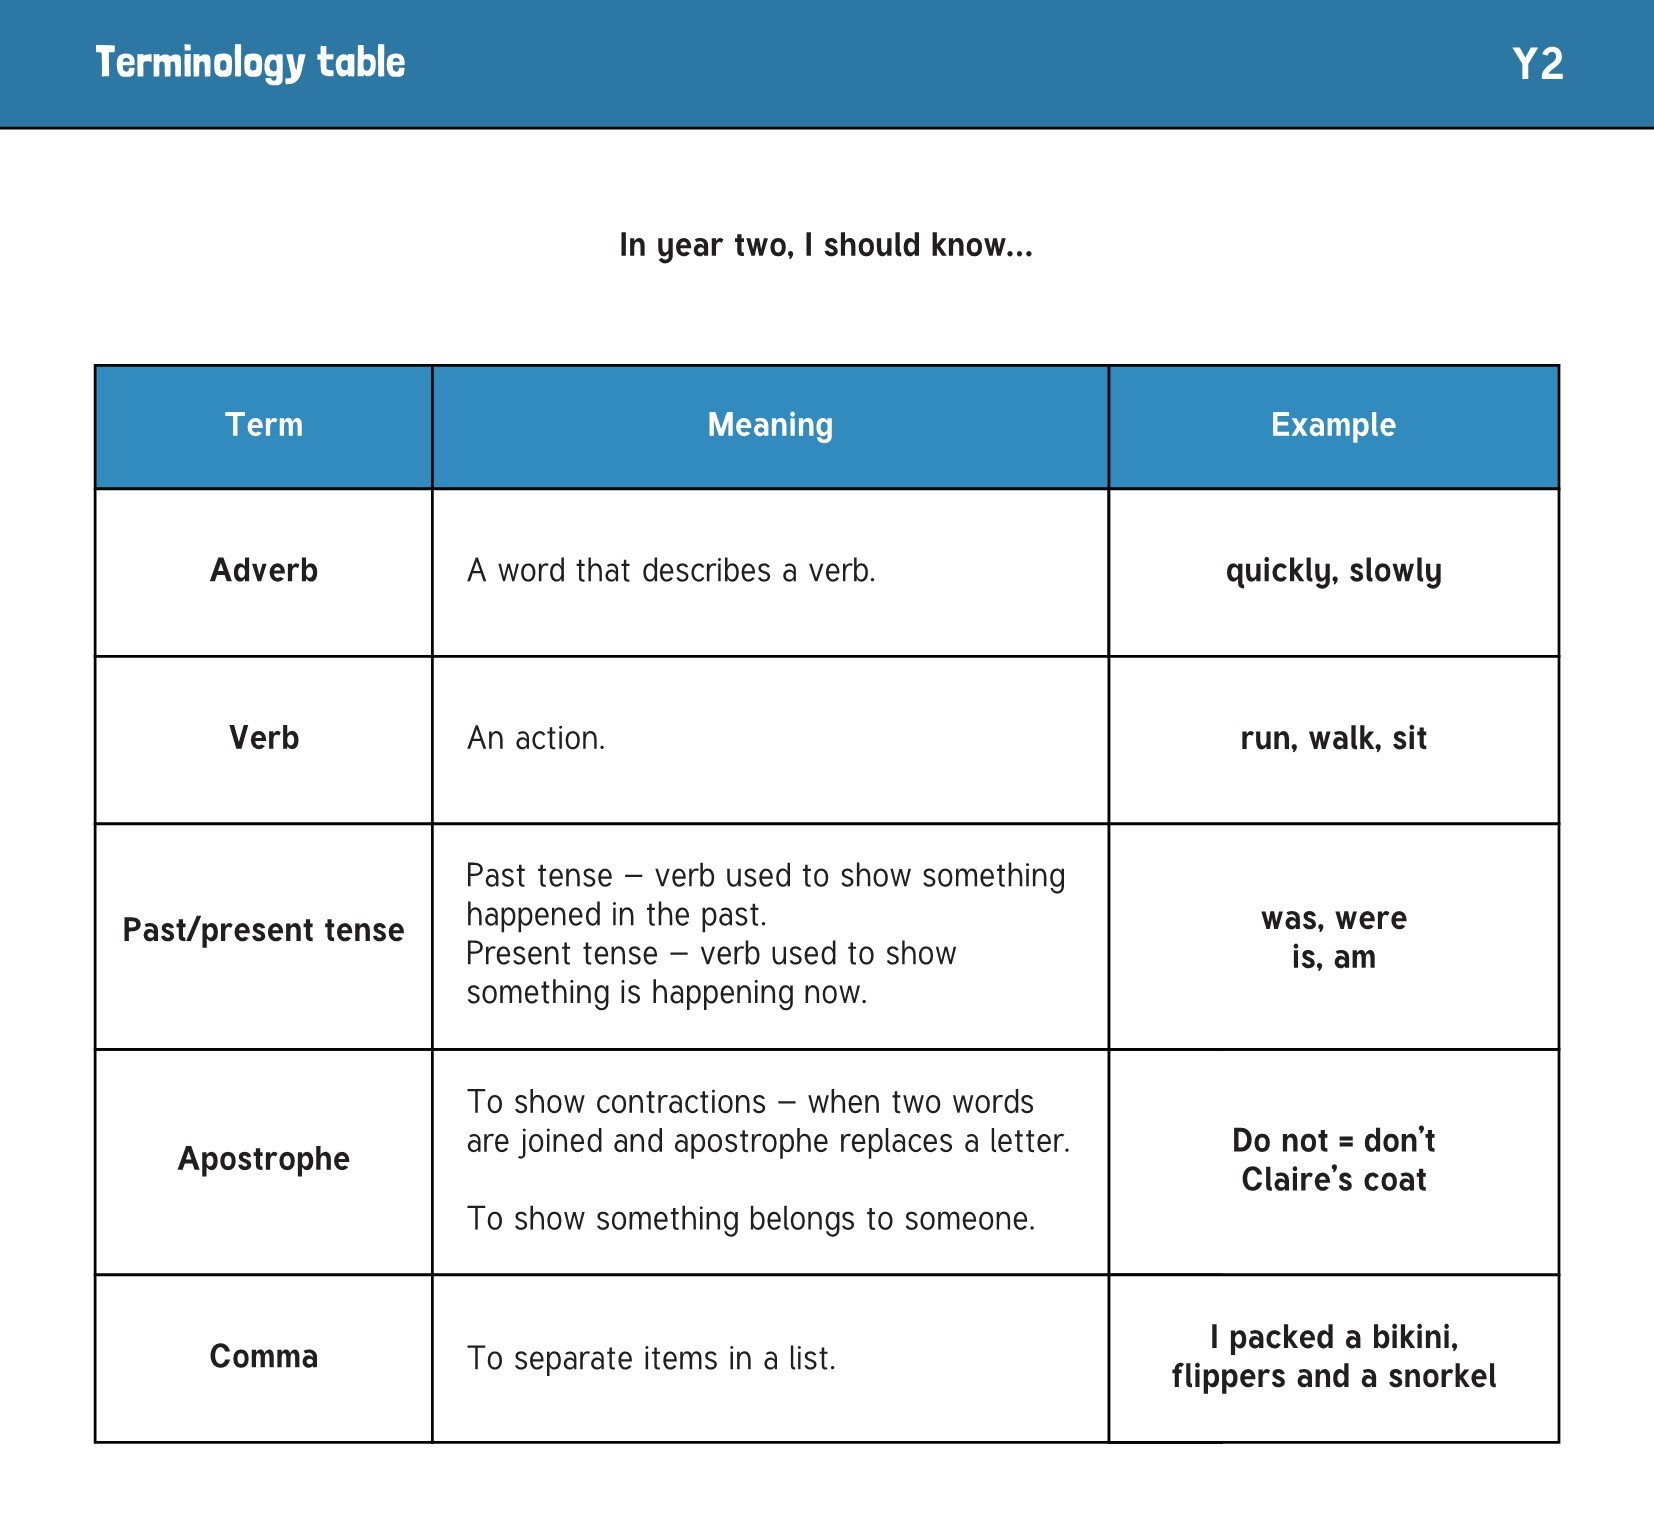 Grammar terminology table Yr2.2 